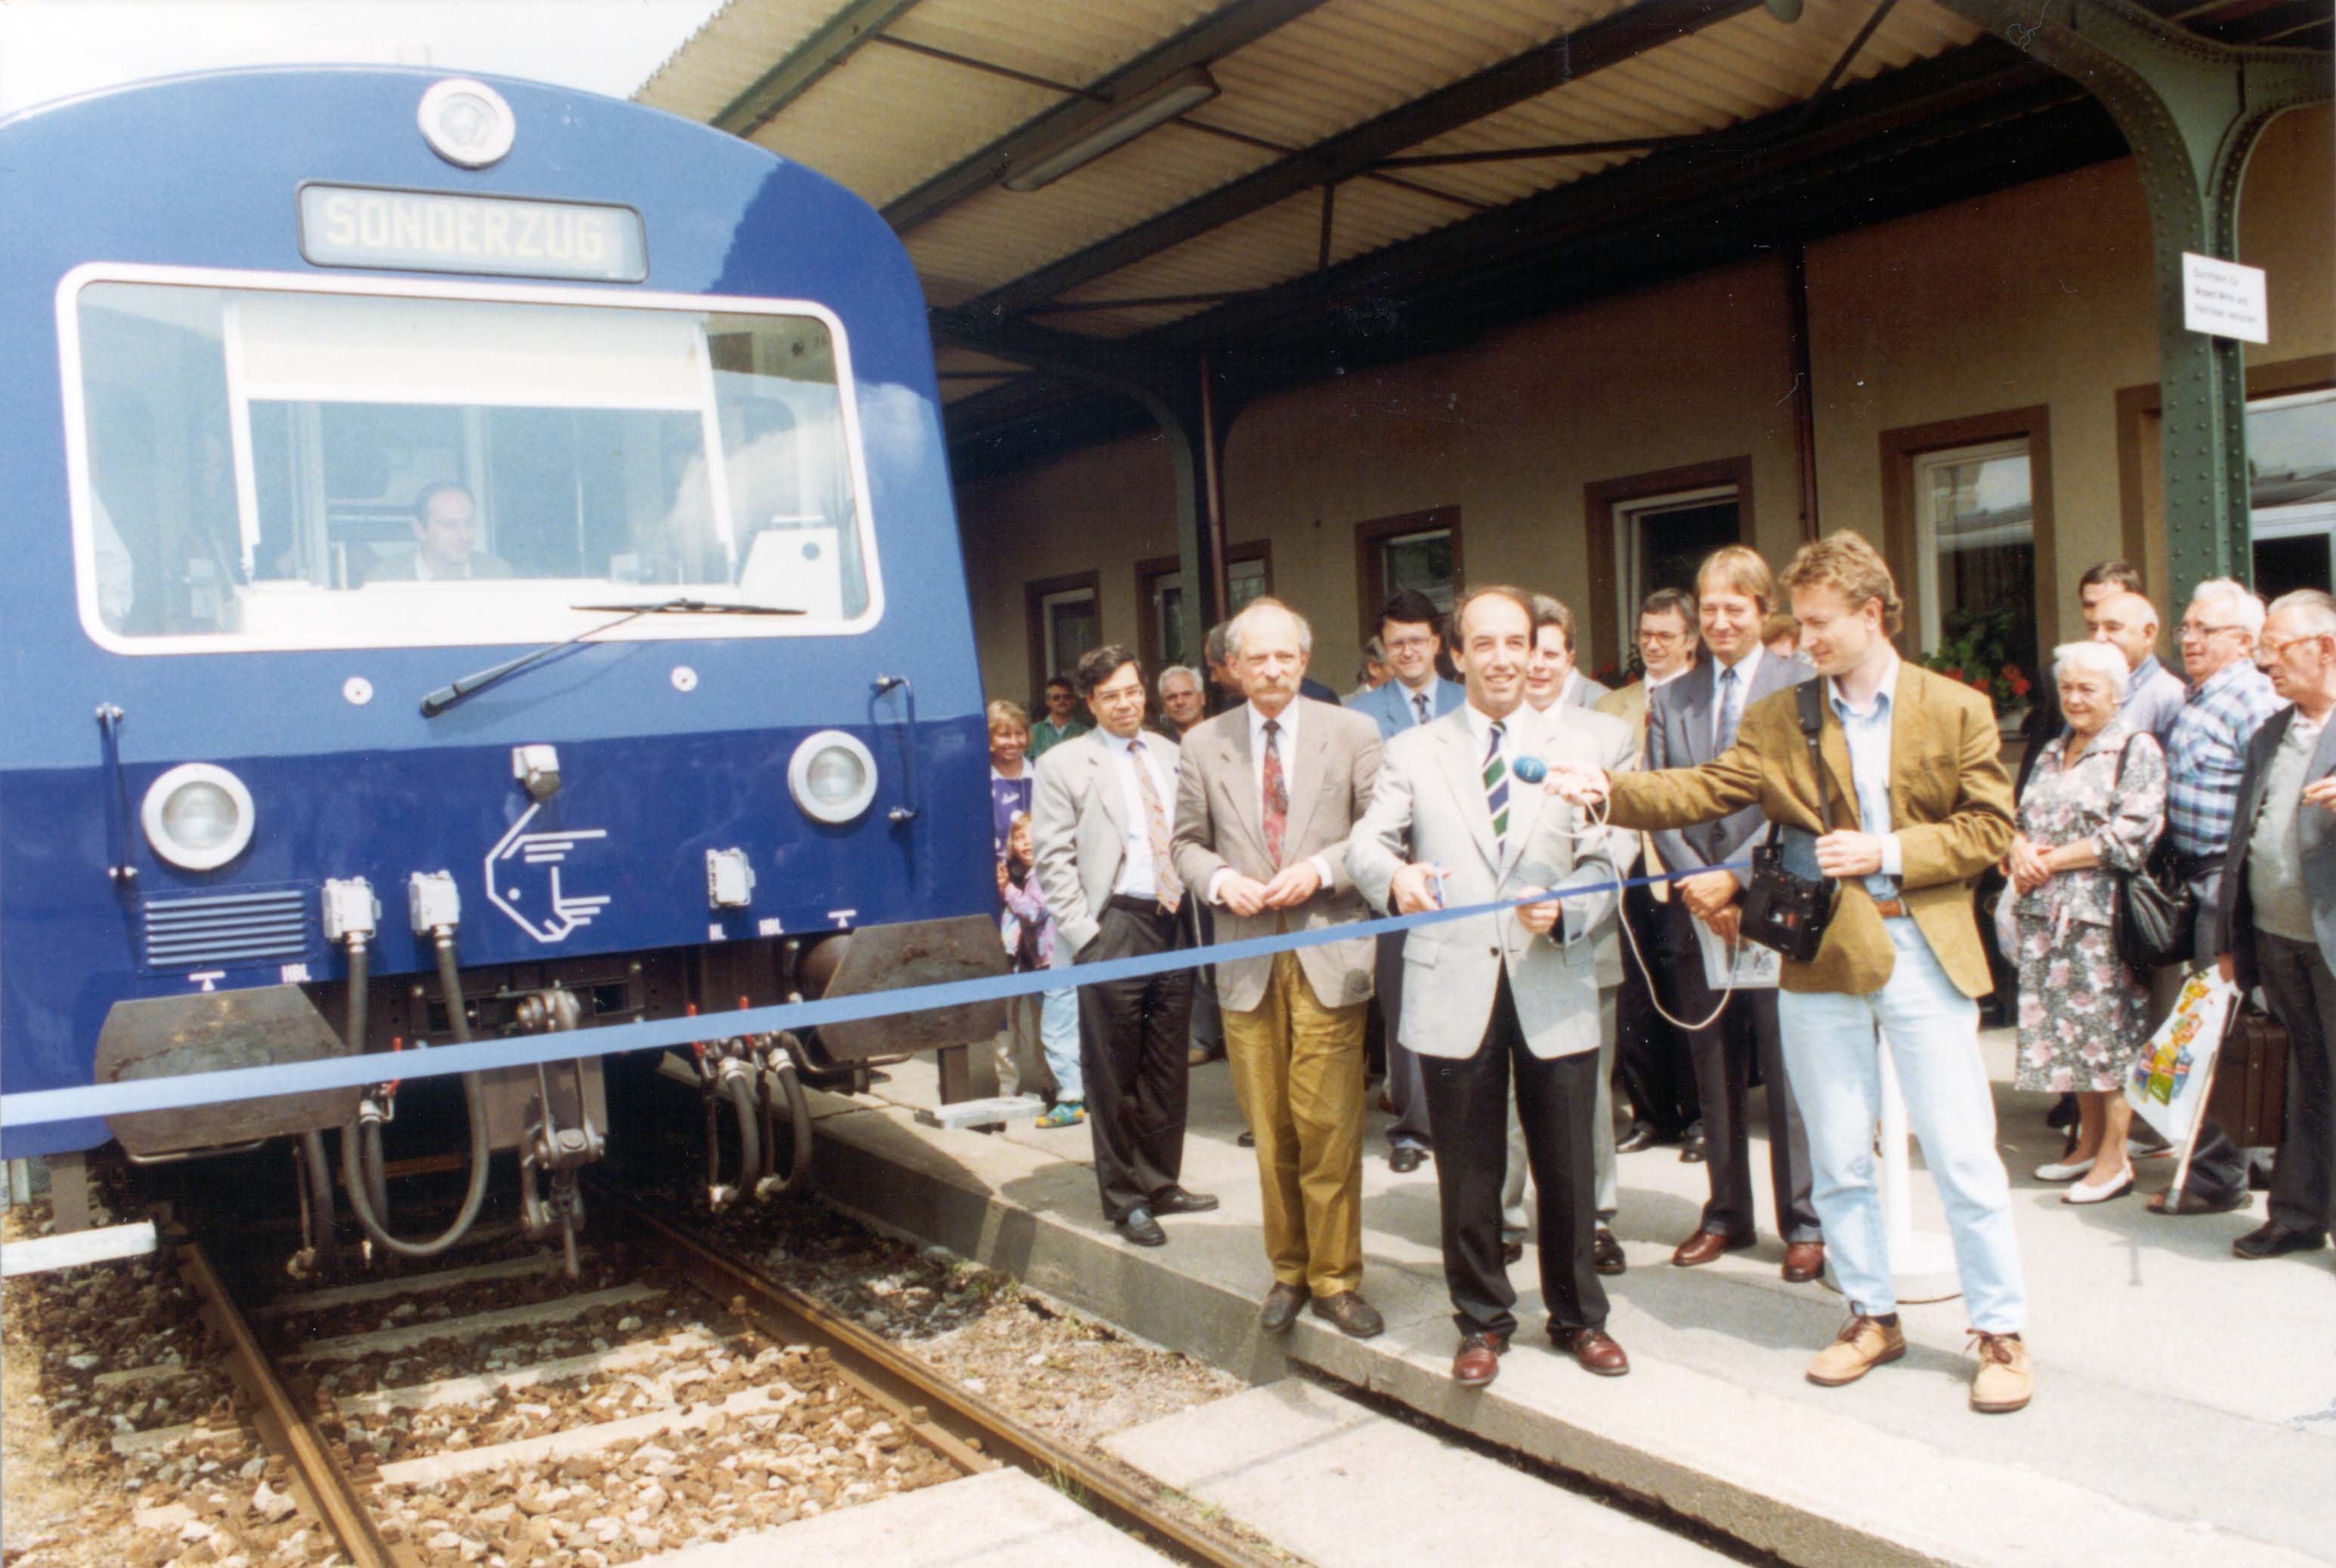 Jubiläum: 25 Jahre Geißbockbahn